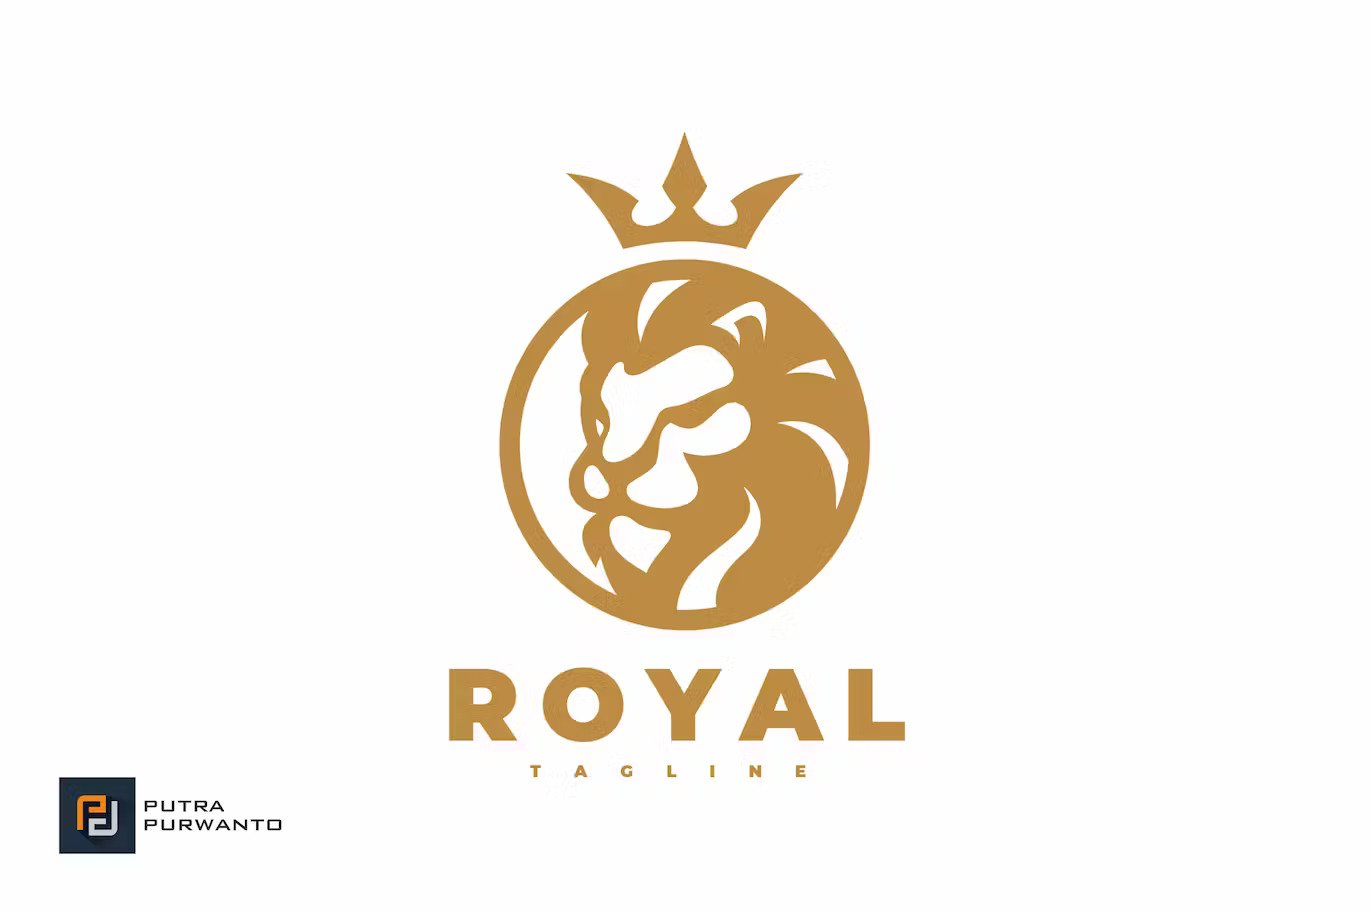 A lion king cicle crest logo